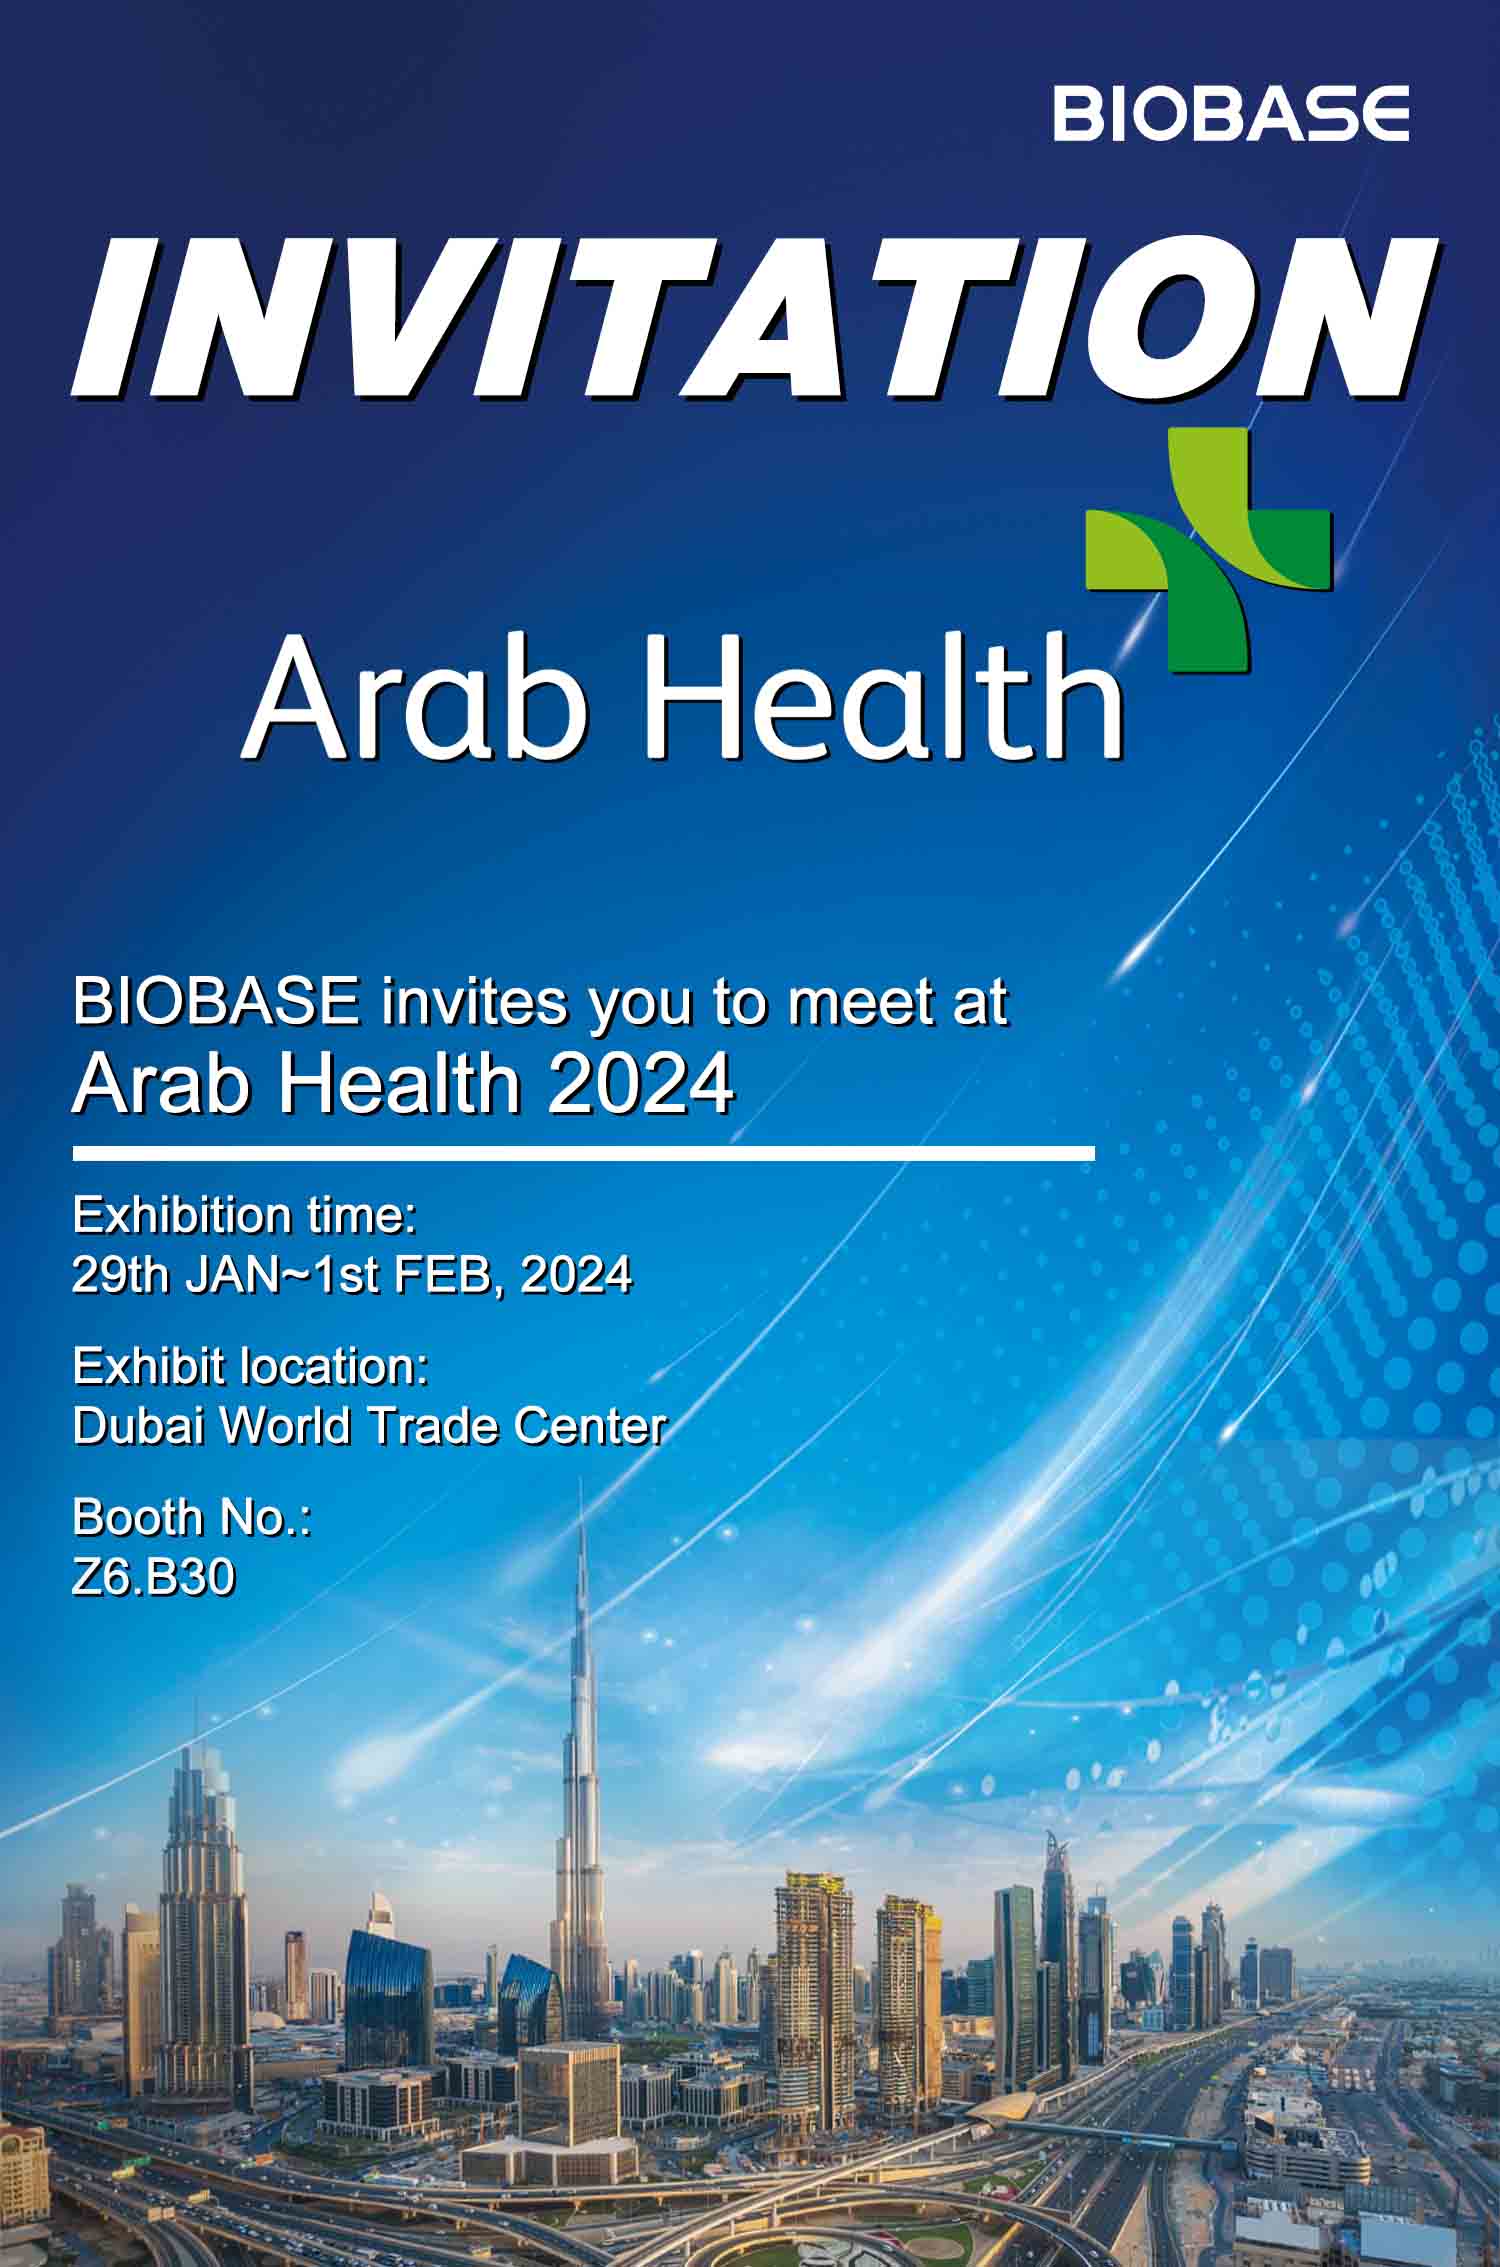 BIOBASE invites you to meet at Arab Health 2024